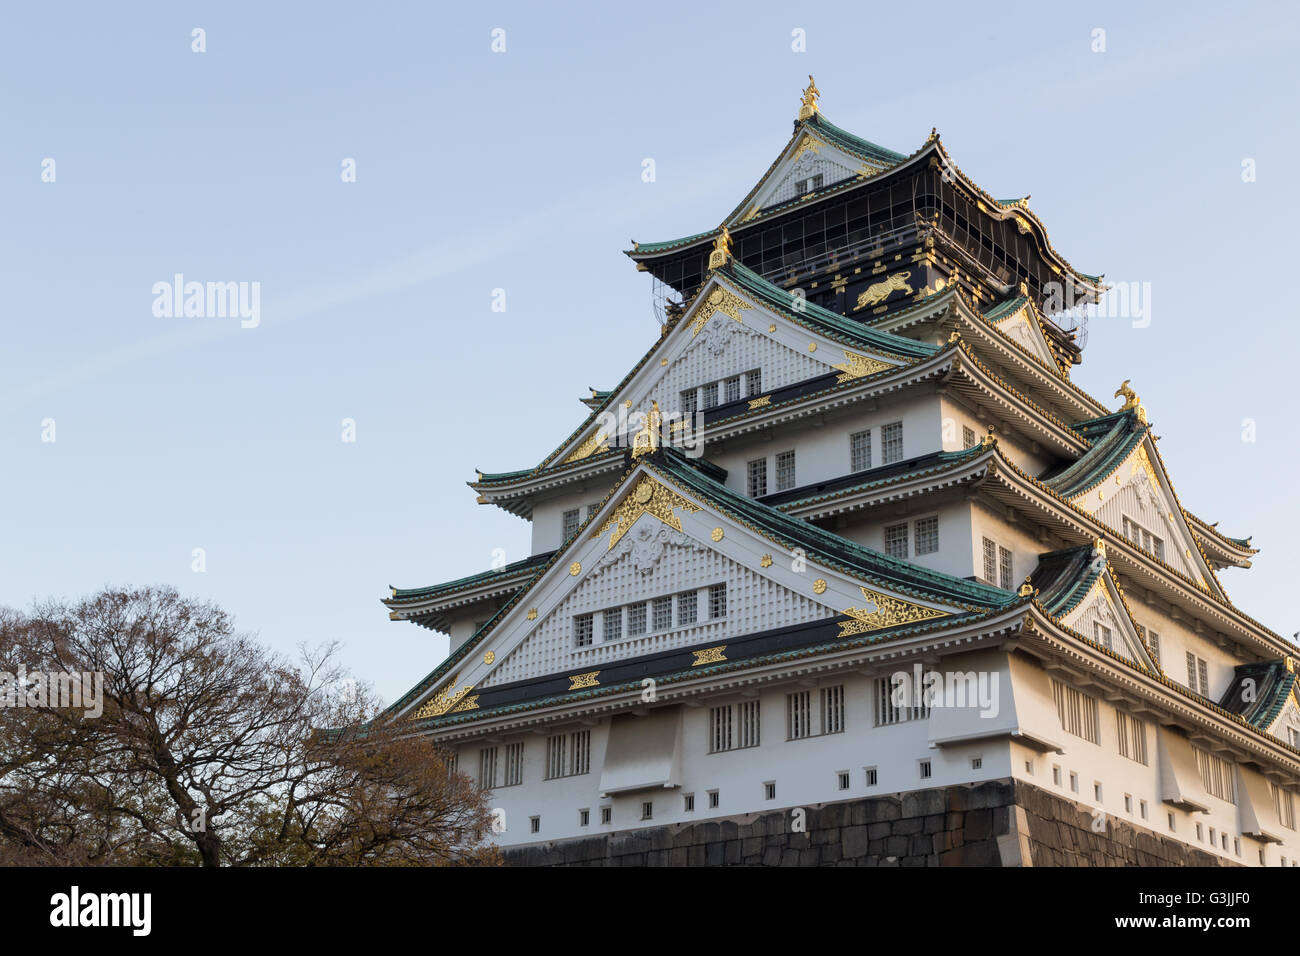 Osaka, Japan - December 10, 2014: The historical Japanese Osaka-Jo castle Stock Photo